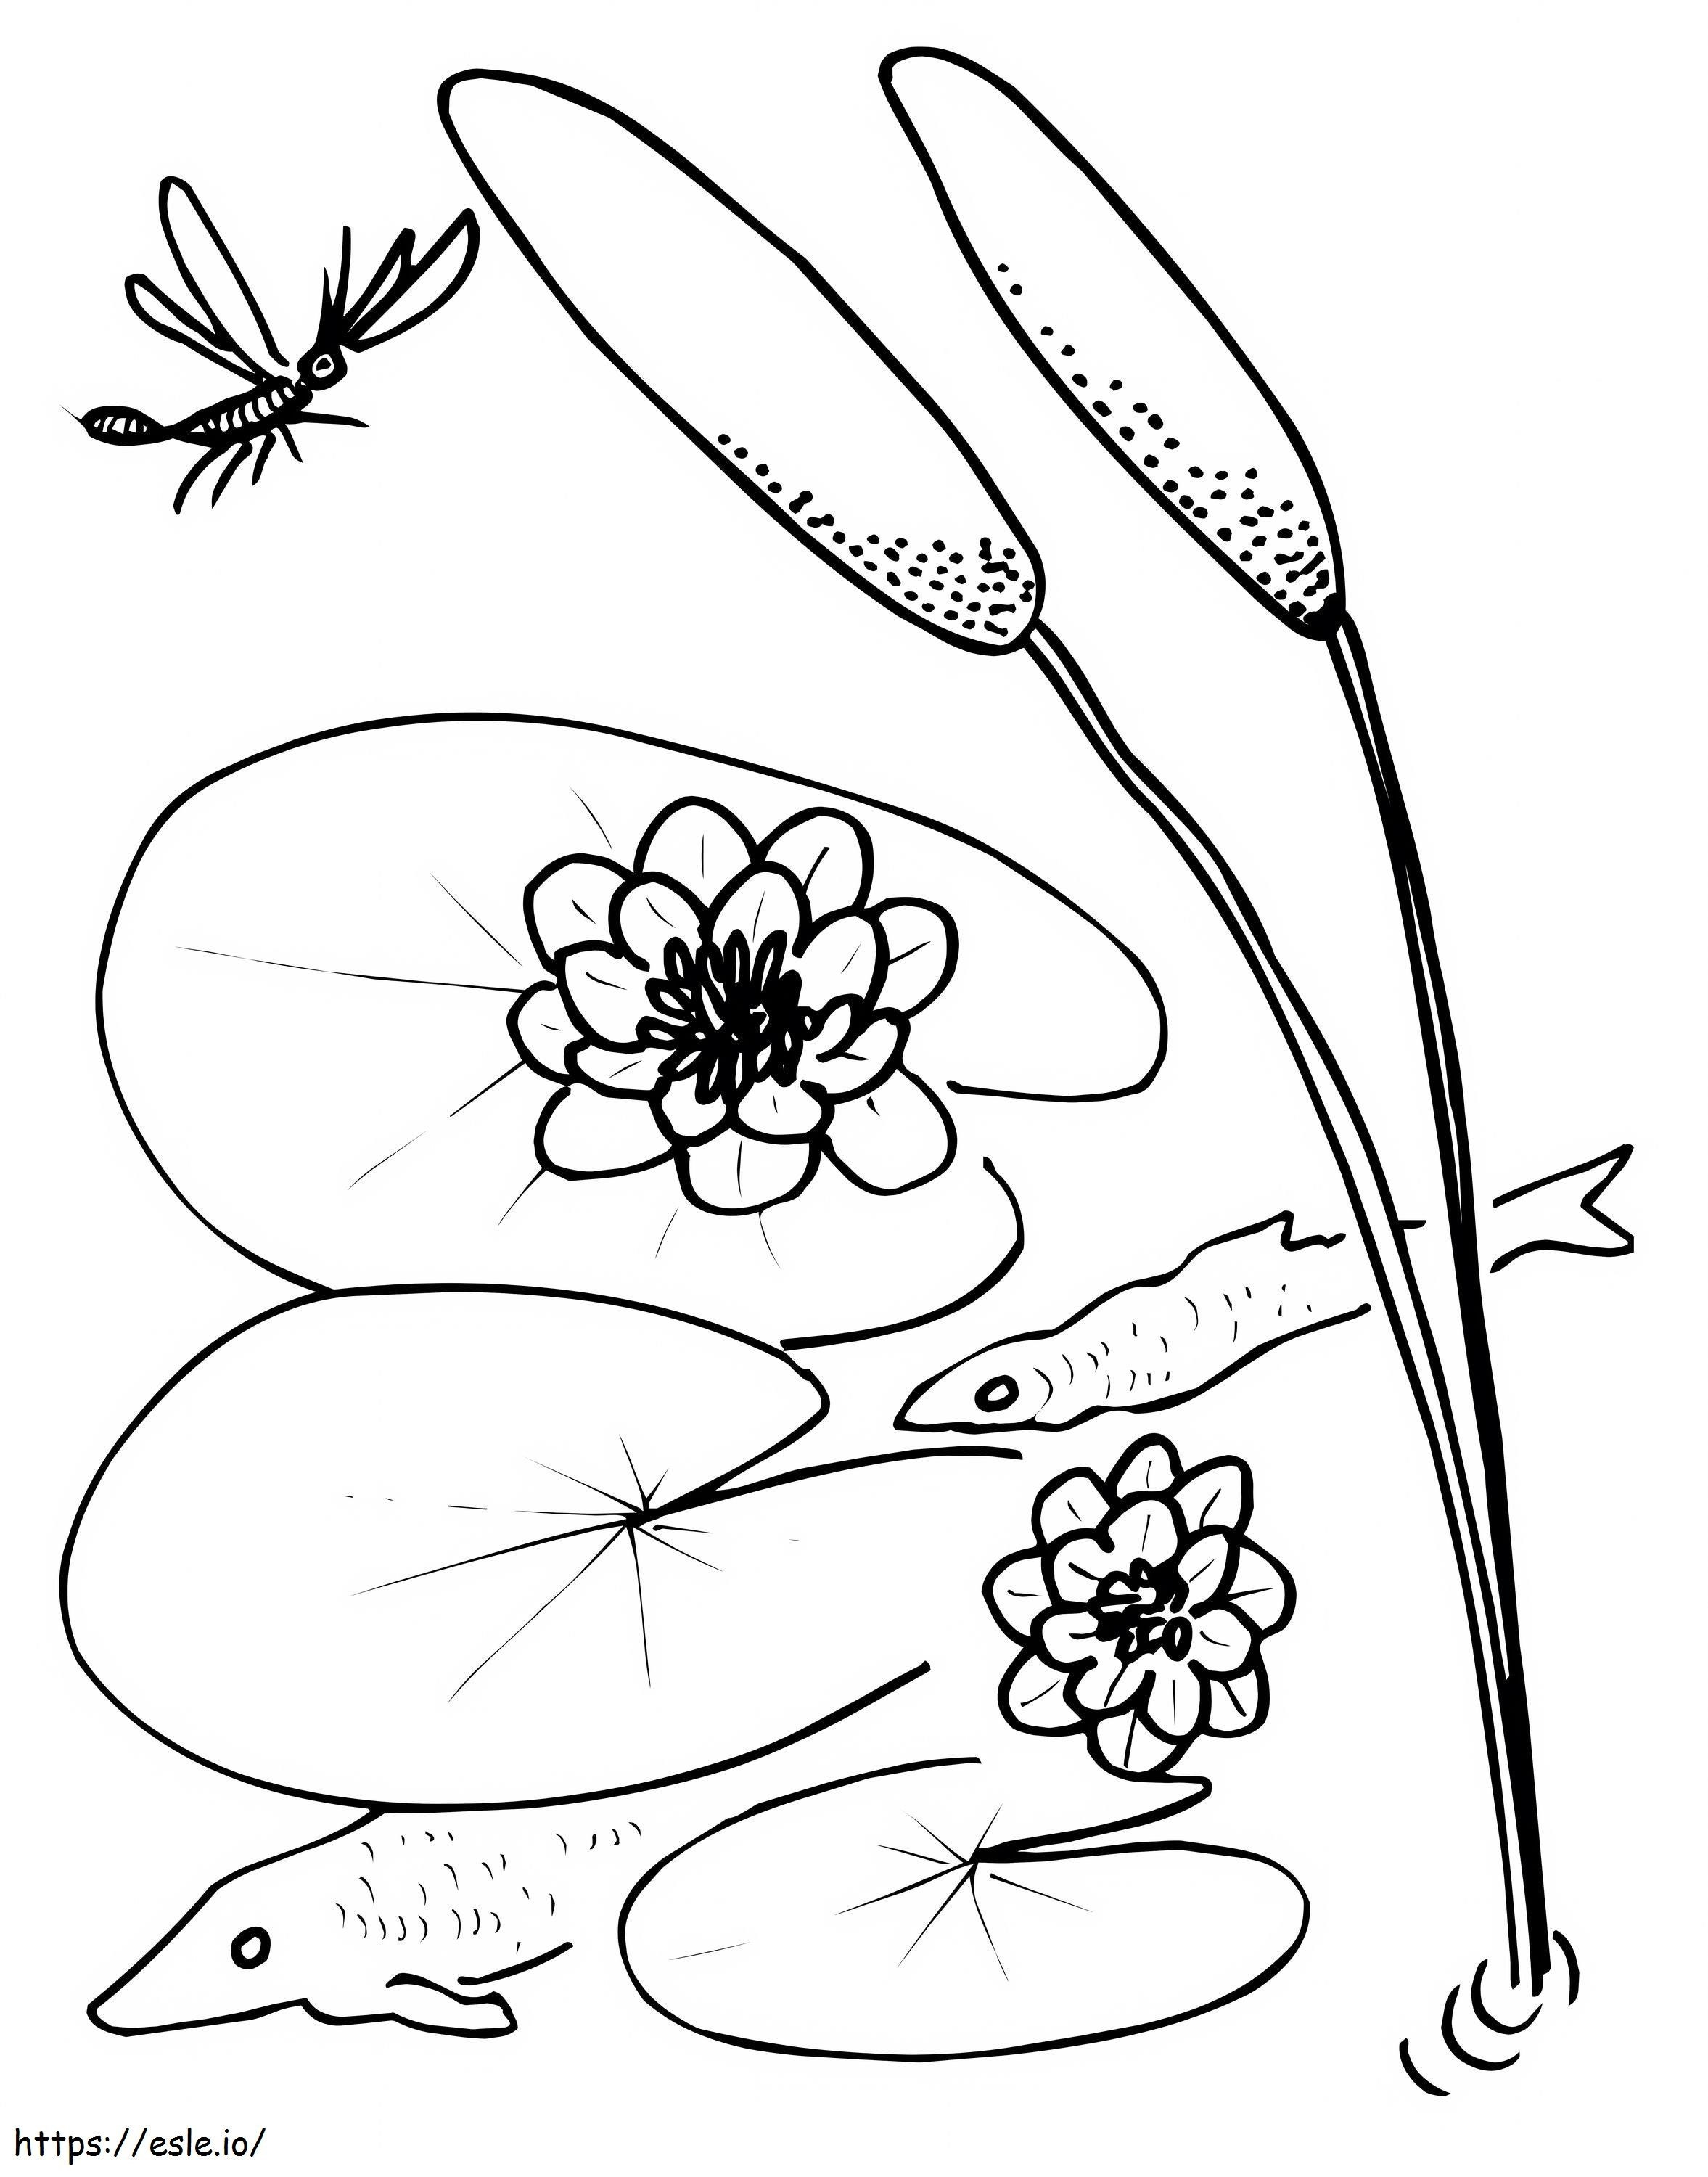 Biene und Seerosenblatt ausmalbilder